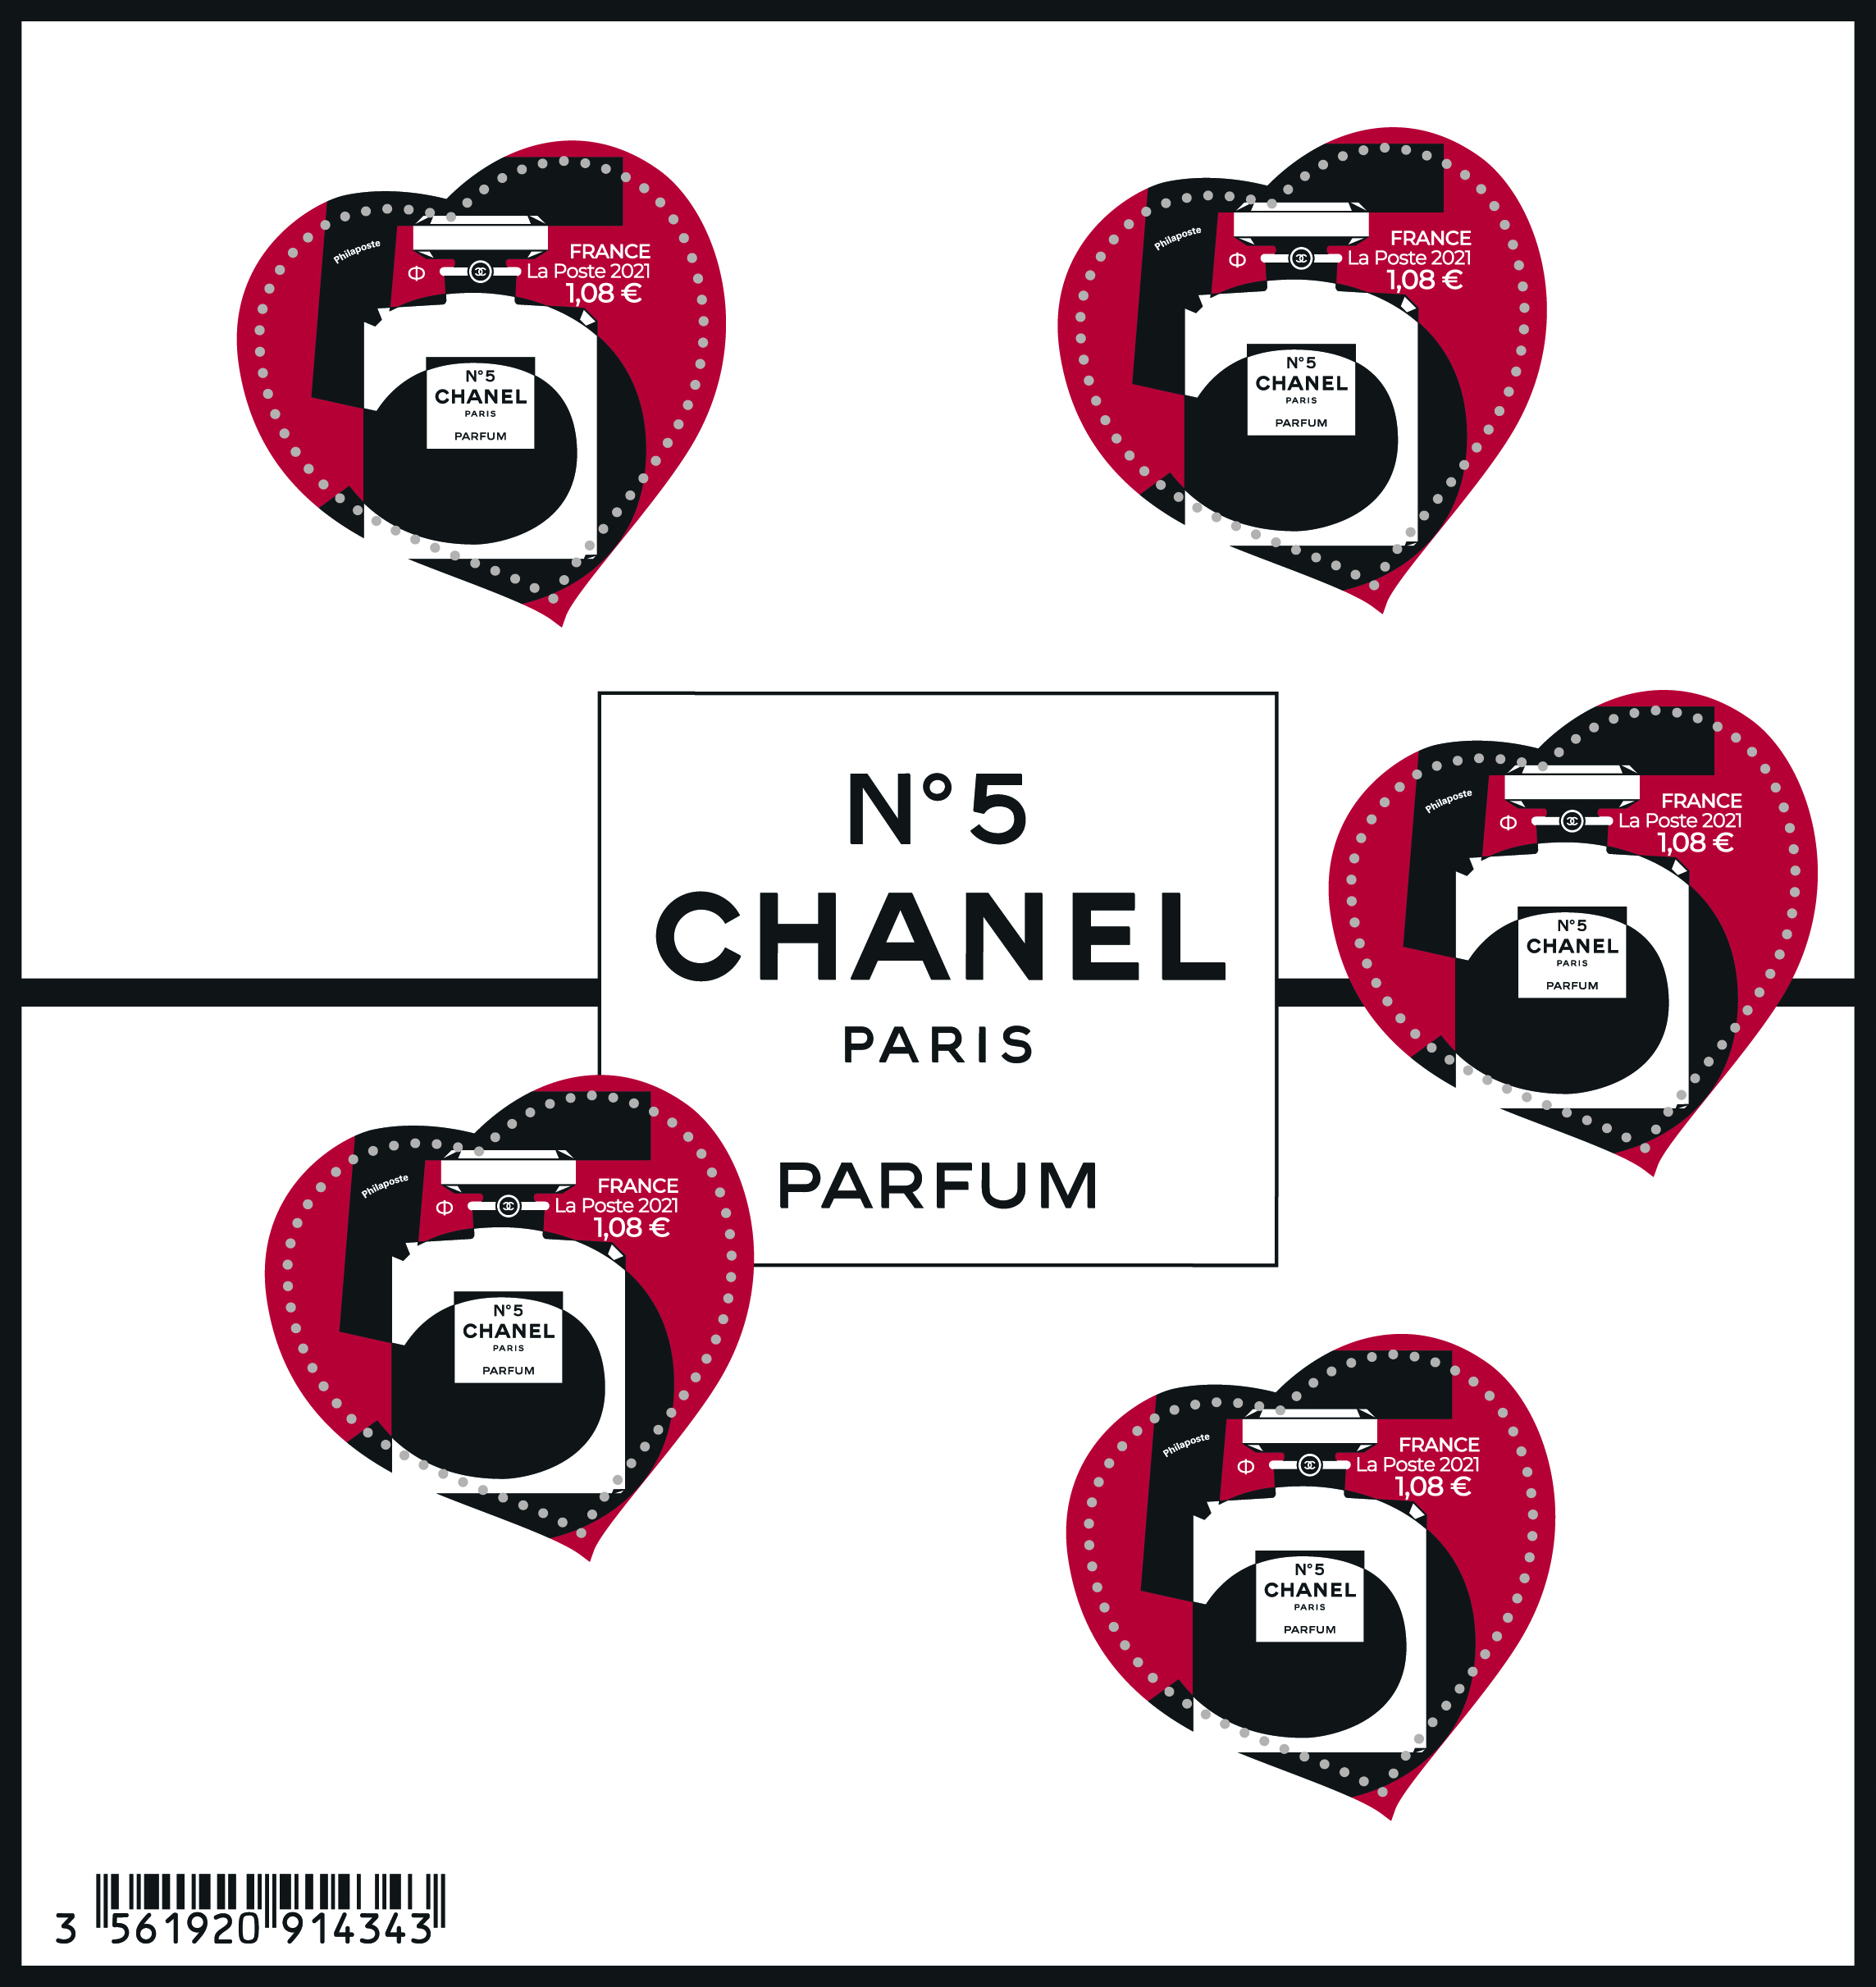 N°5 CHANEL PARIS PARFUM